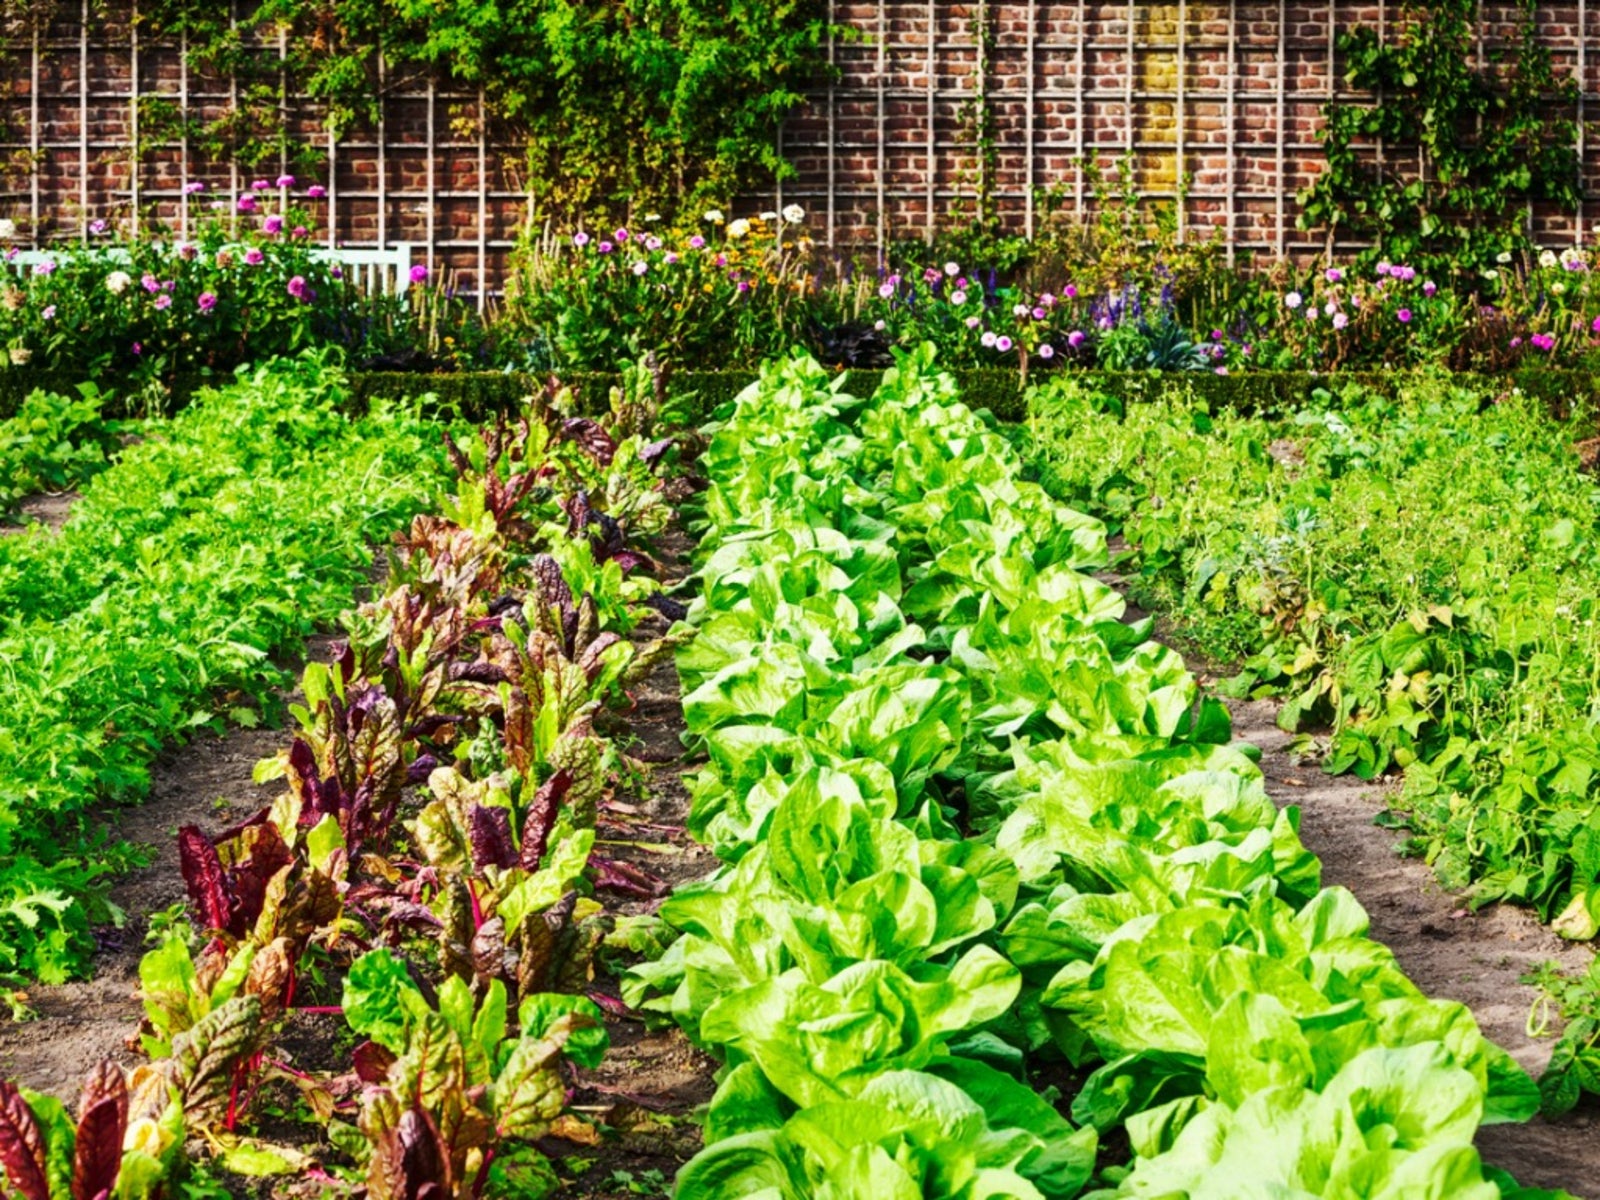 vegetable garden orientation - direction of vegetable garden rows